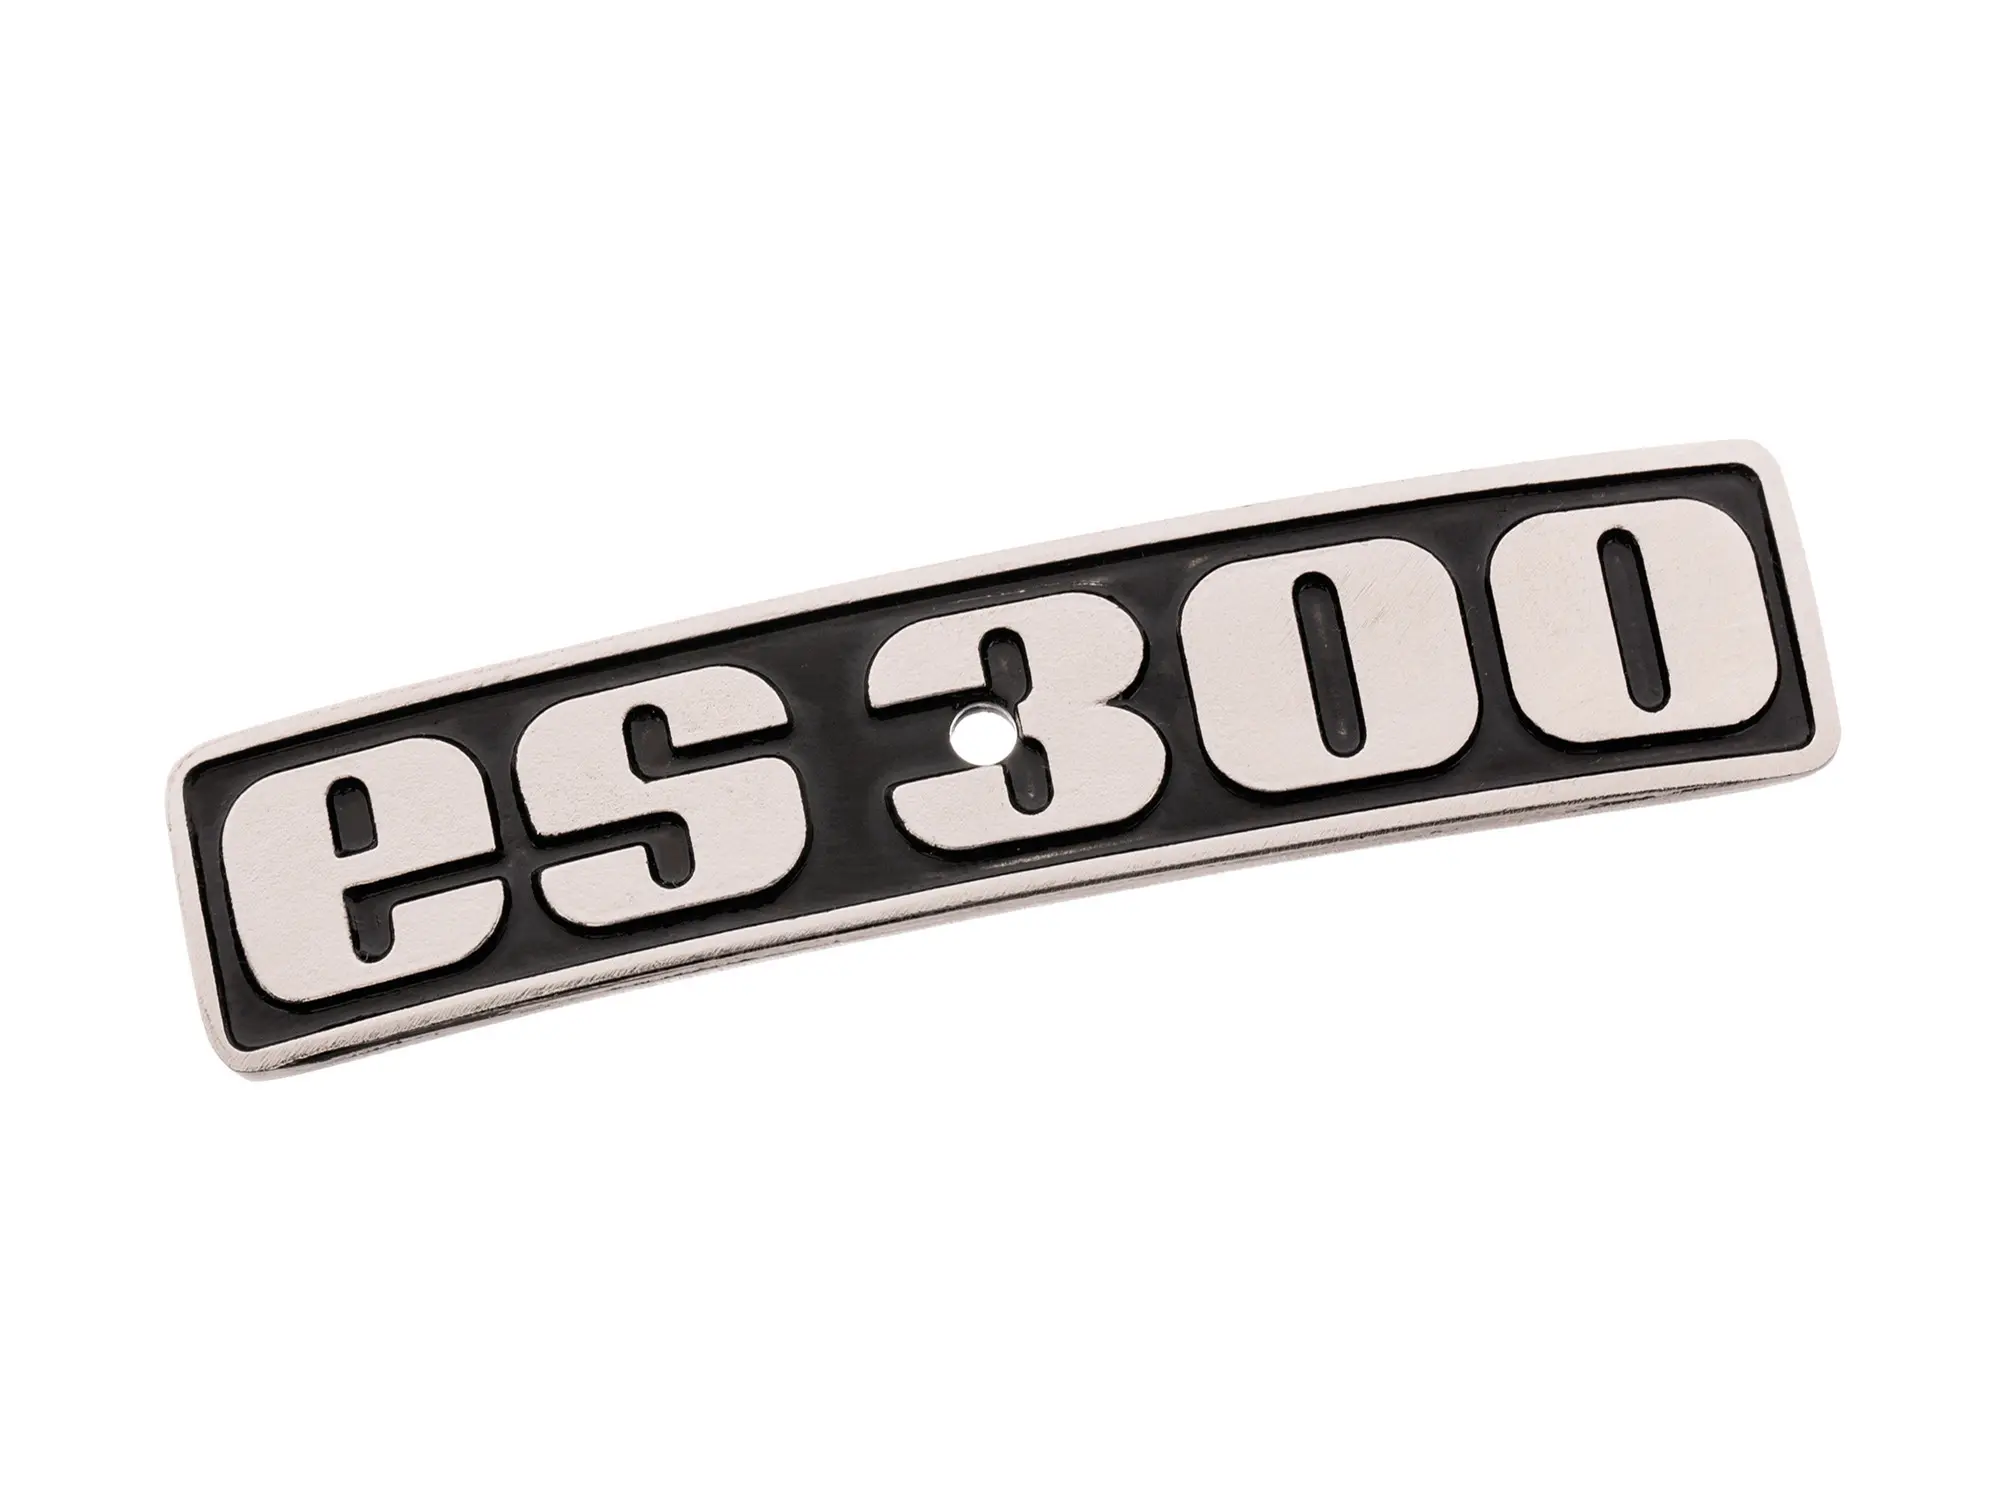 Schriftzug (Plakette aus Aluminium) "ES300", Art.-Nr.: 10067994 - Bild 1